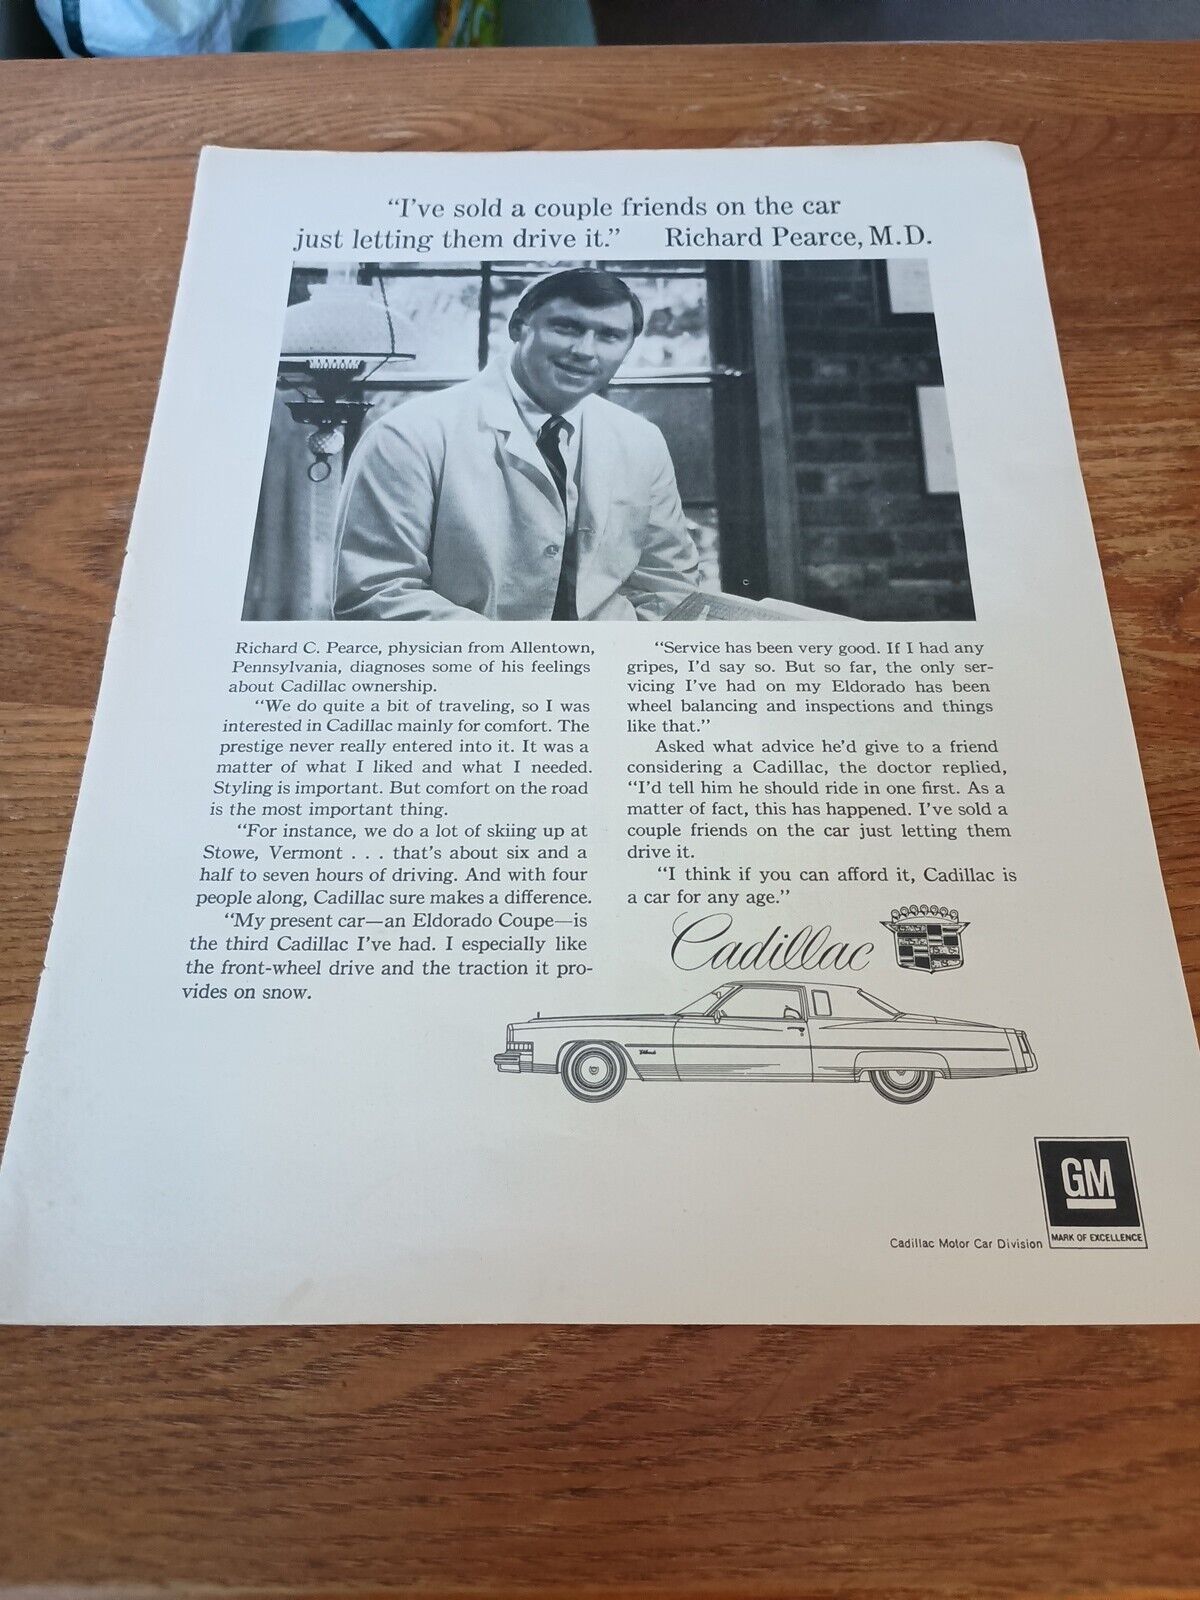 1974 Cadillac Richard Pearce M.D. Tells Friends Magazine Ad